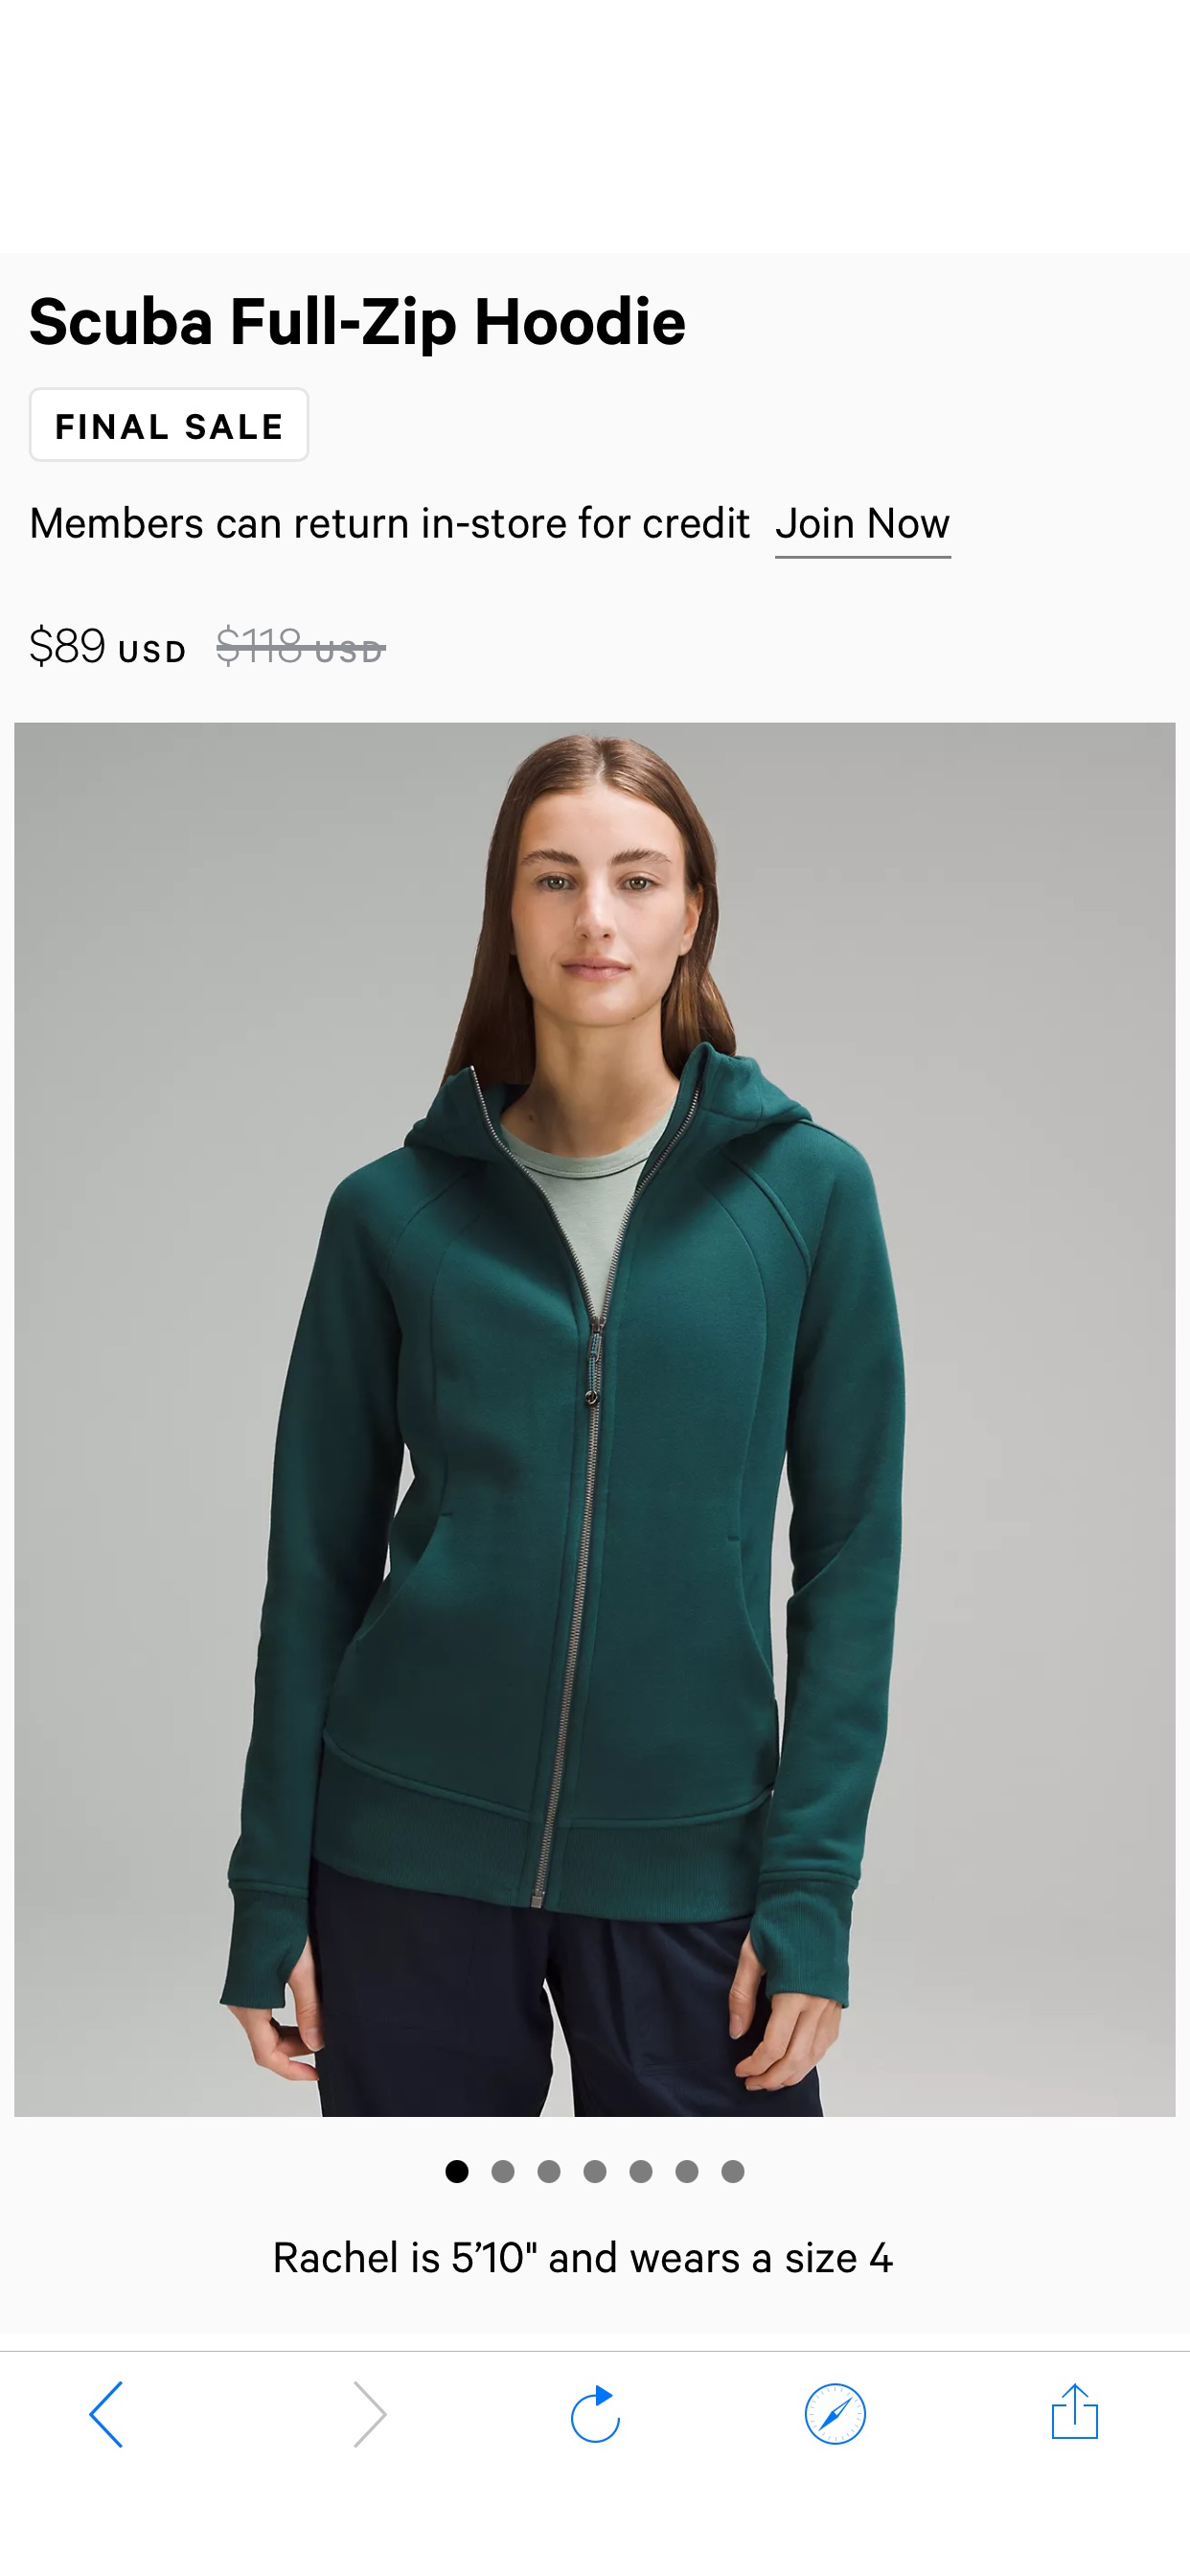 Scuba Full-Zip Hoodie | Women's Hoodies & Sweatshirts | lululemon Scuba Full-Zip Hoodie
原價118，現在才89，墨绿色 碼全